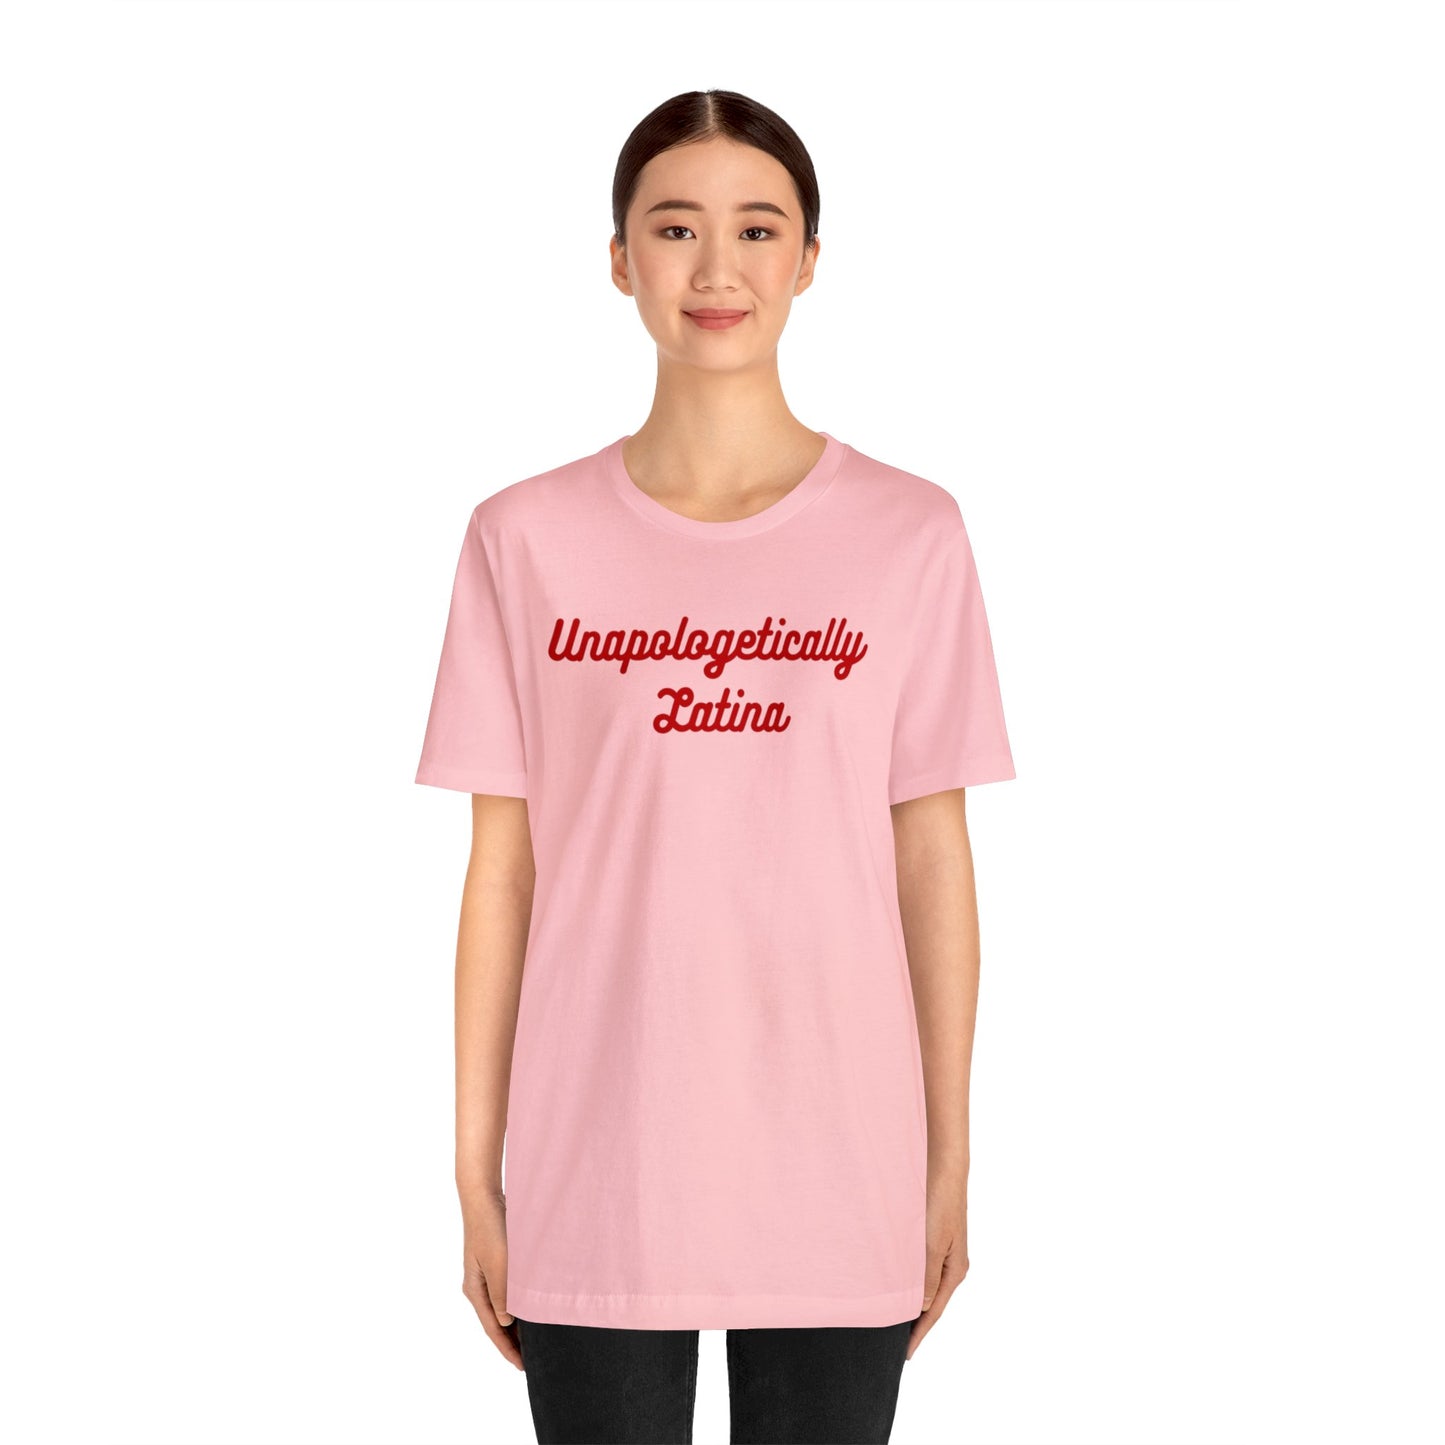 Unapologetically Latina T-Shirt